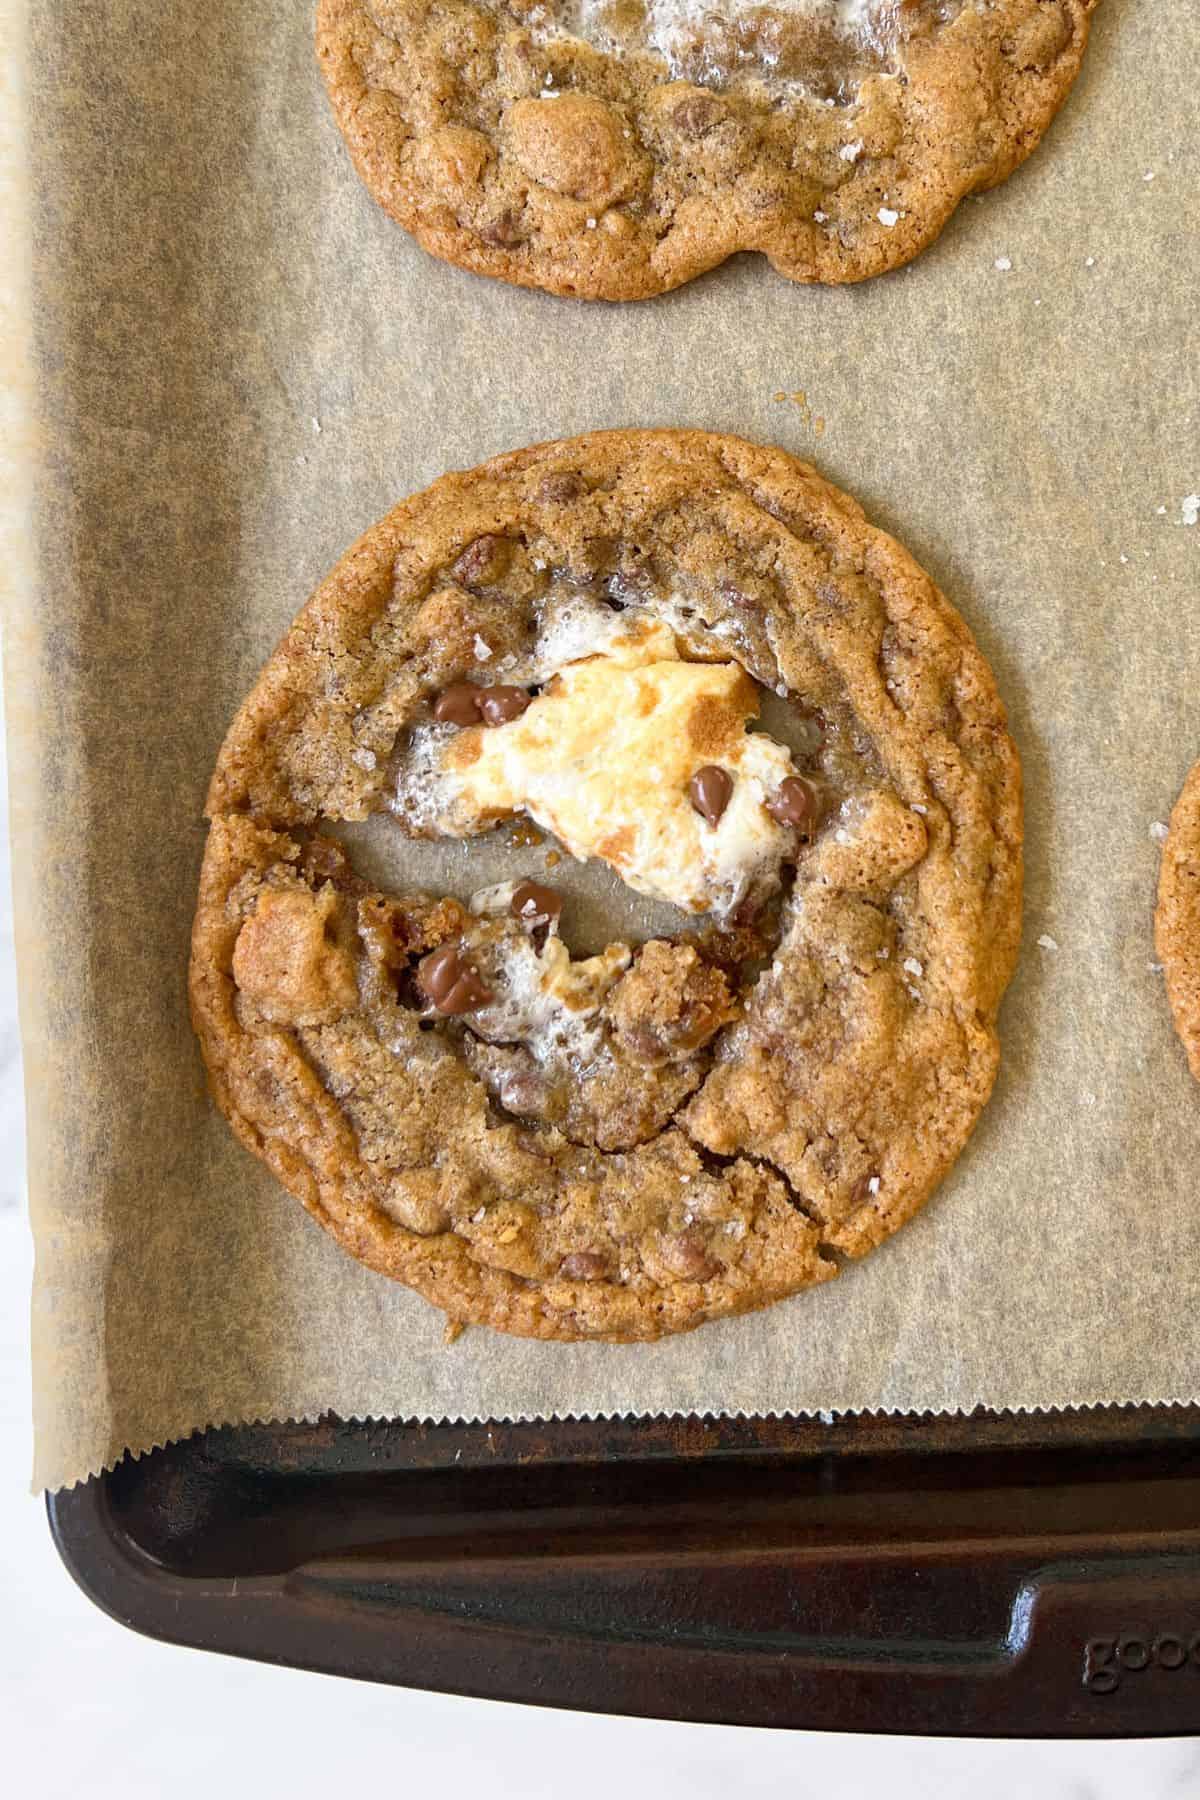 Chocolate Chip Marshmallow Cookie broken in half.